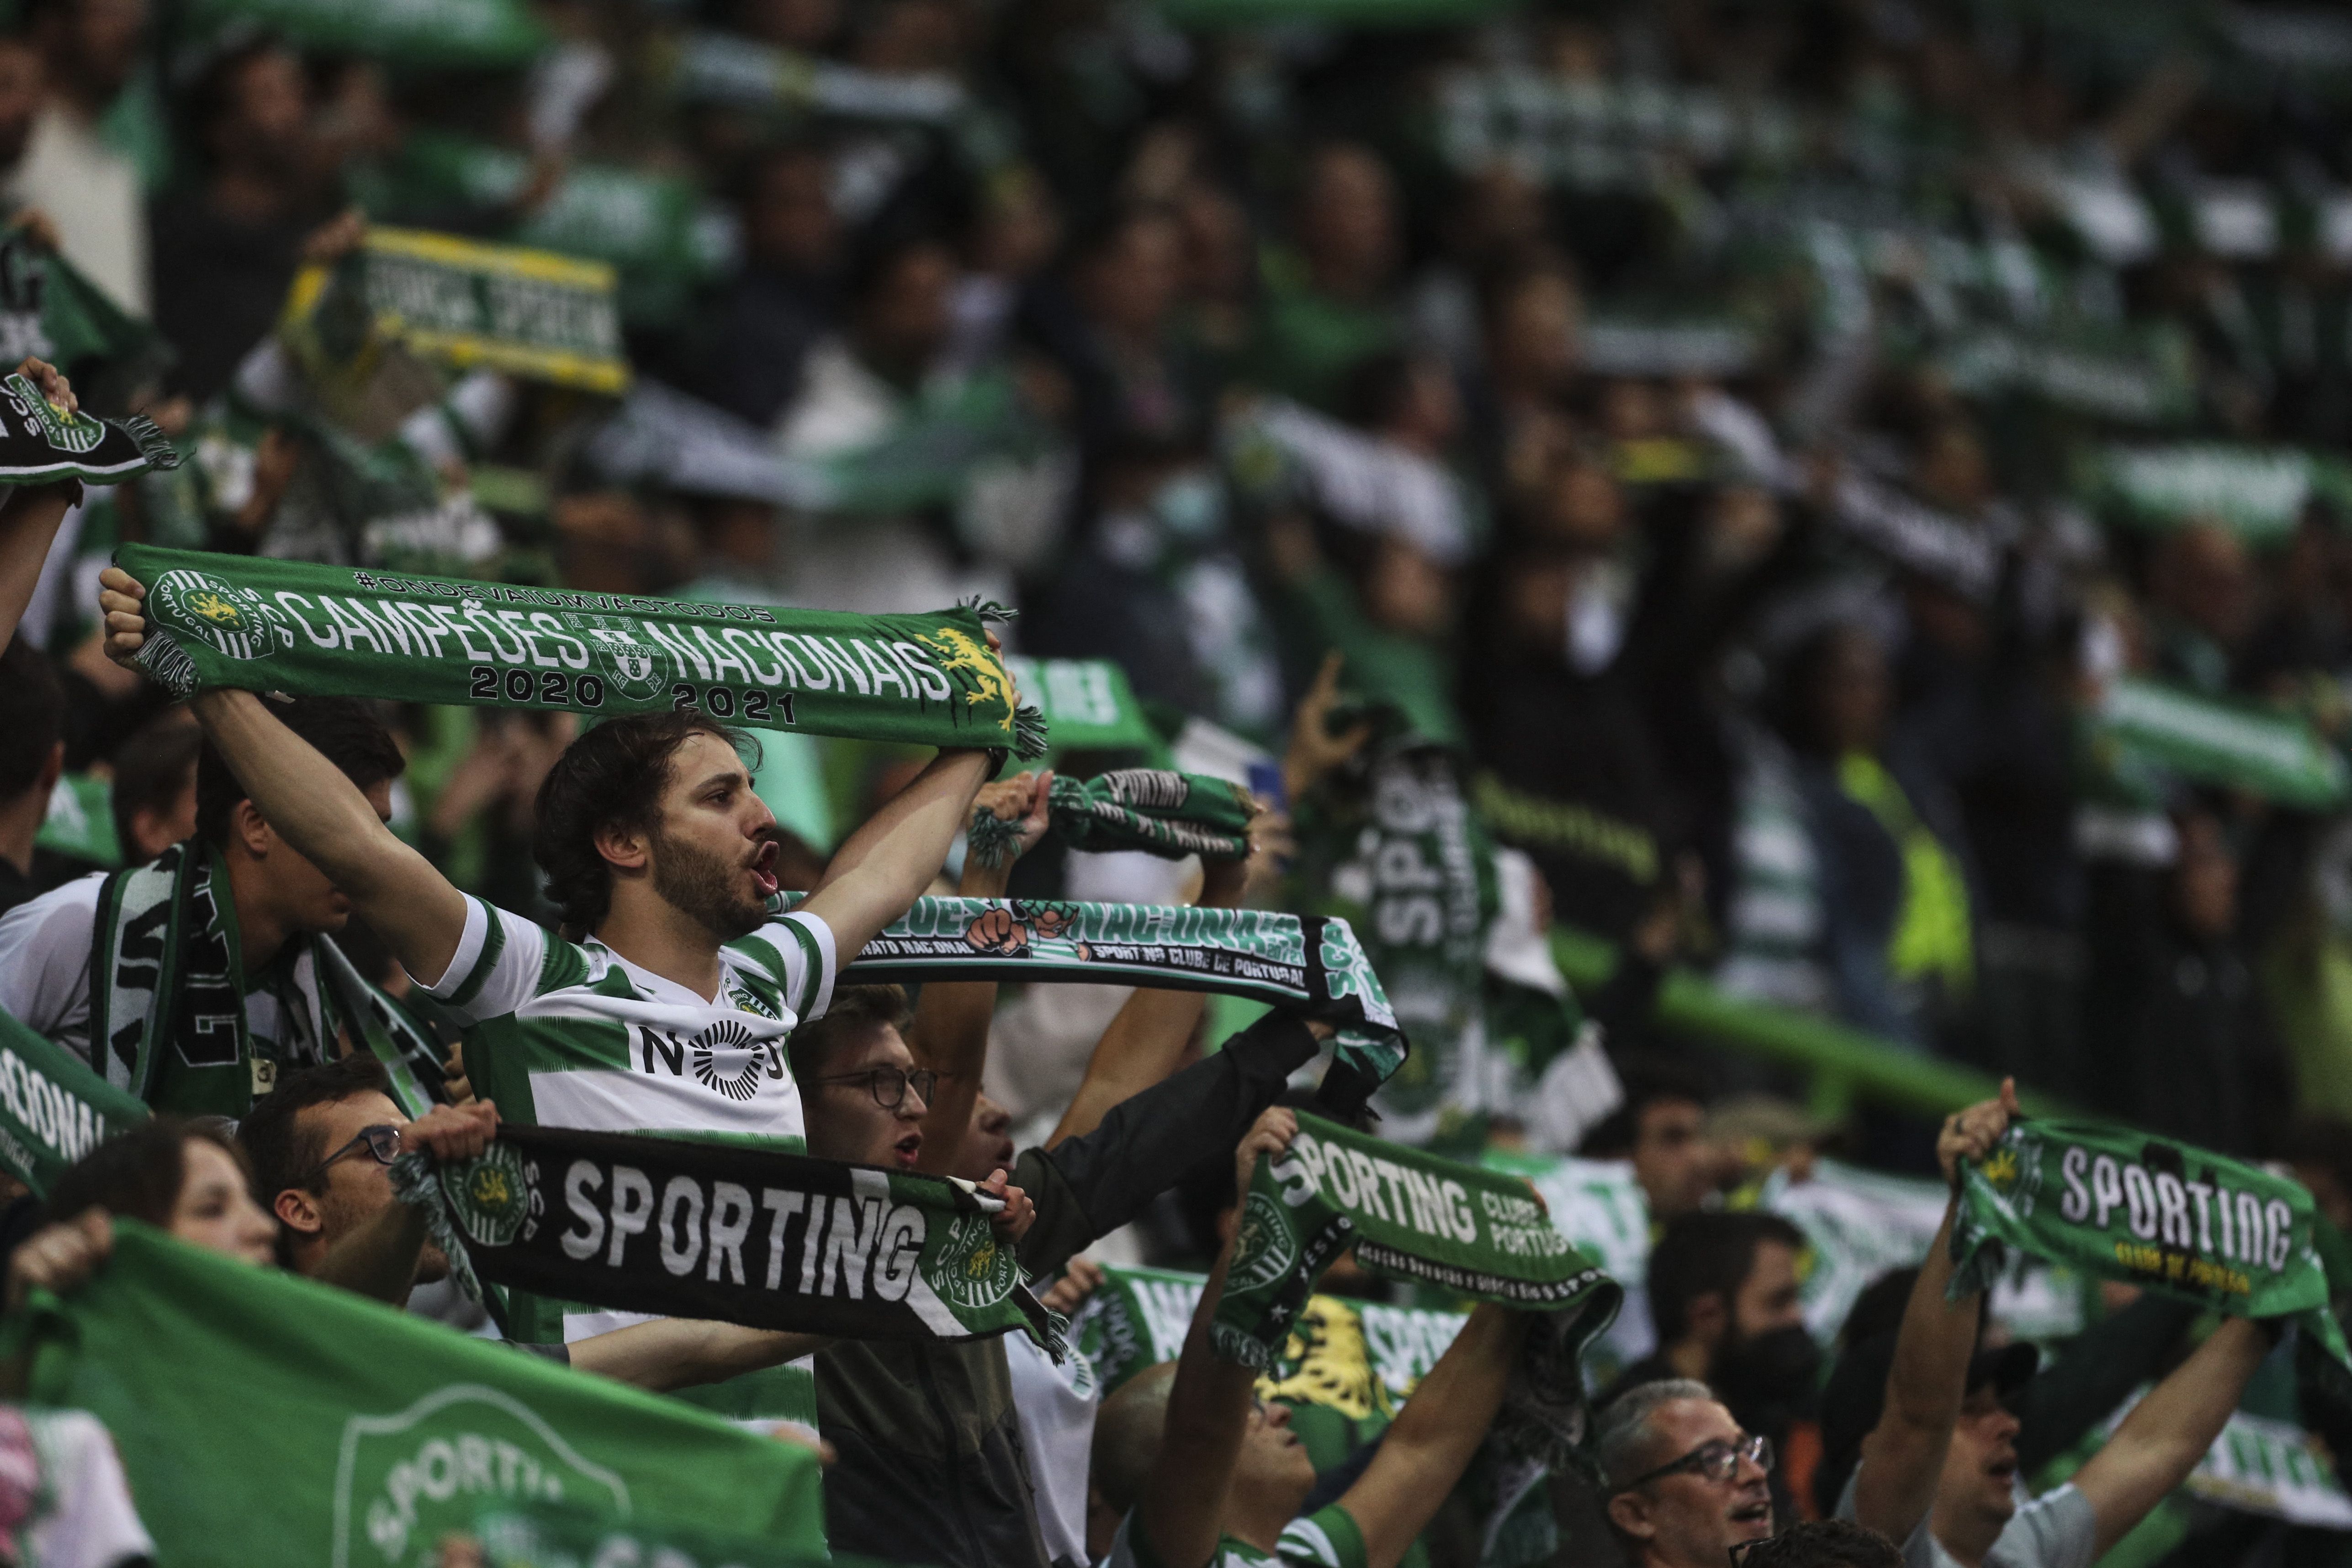 Sporting fans at José Alvalade Stadium